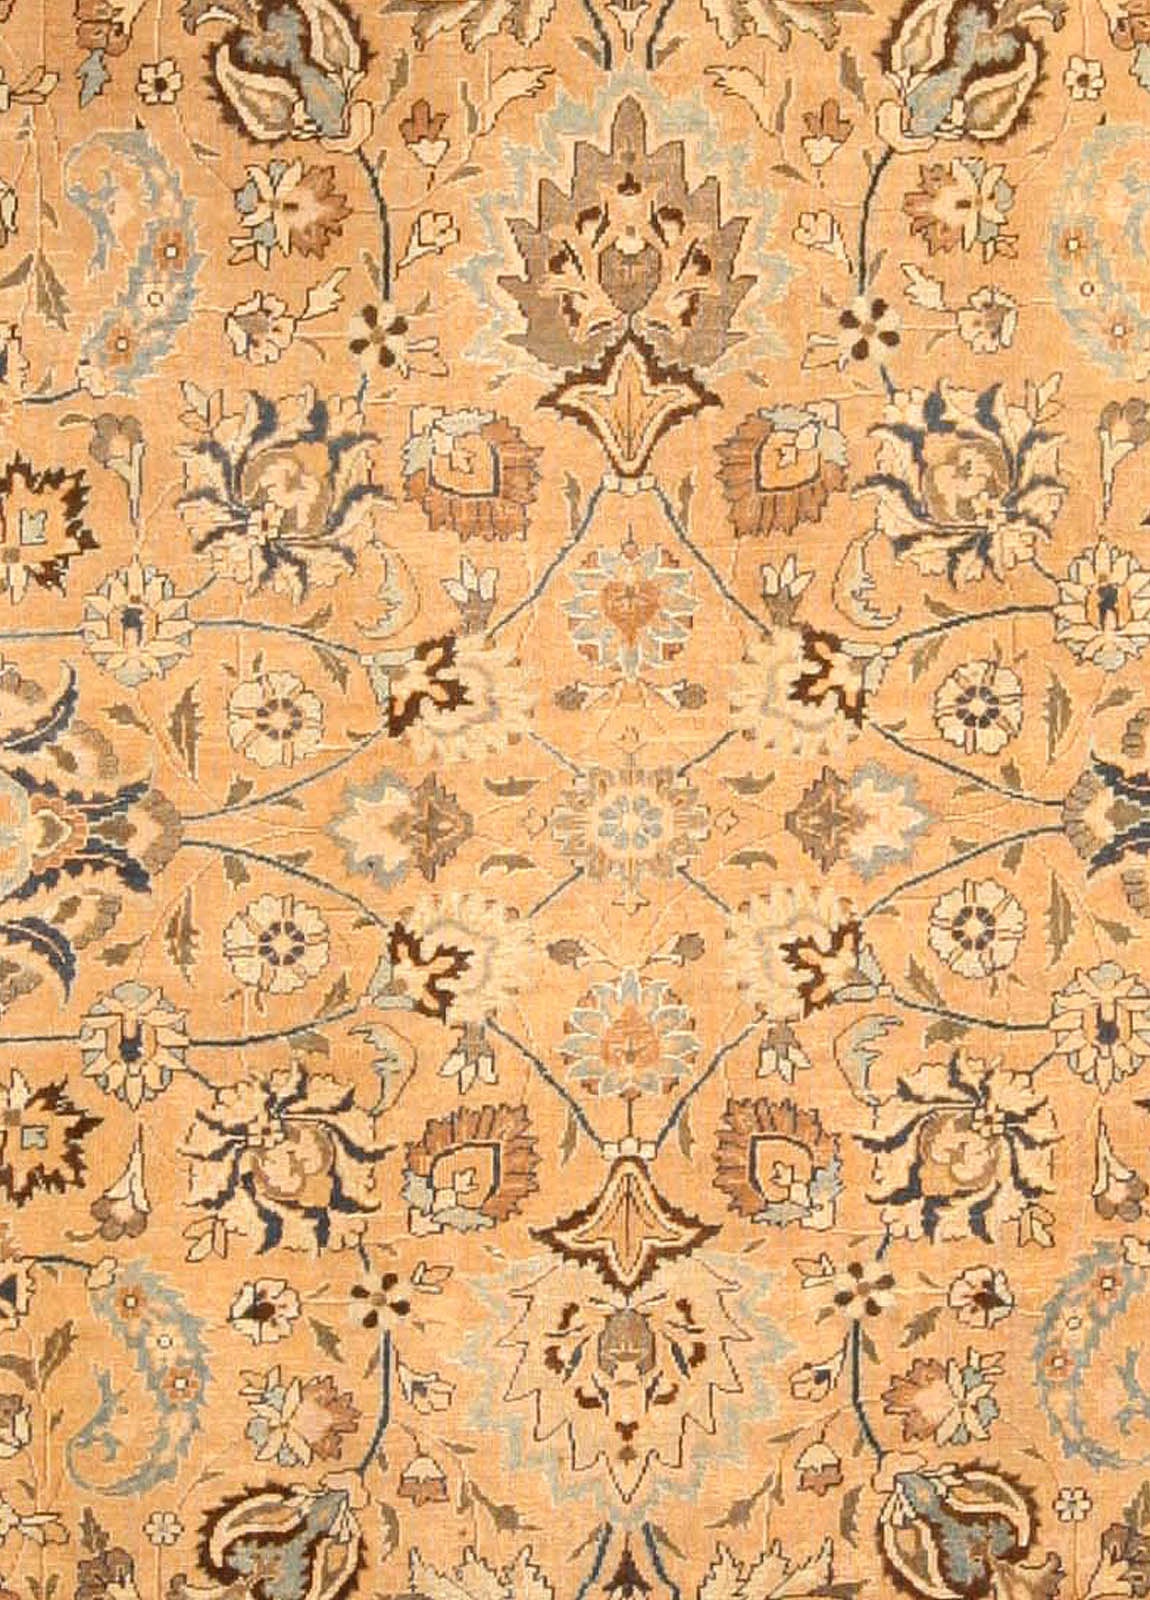 Antique Persian Tabriz orange handmade wool rug
Size: 11'2